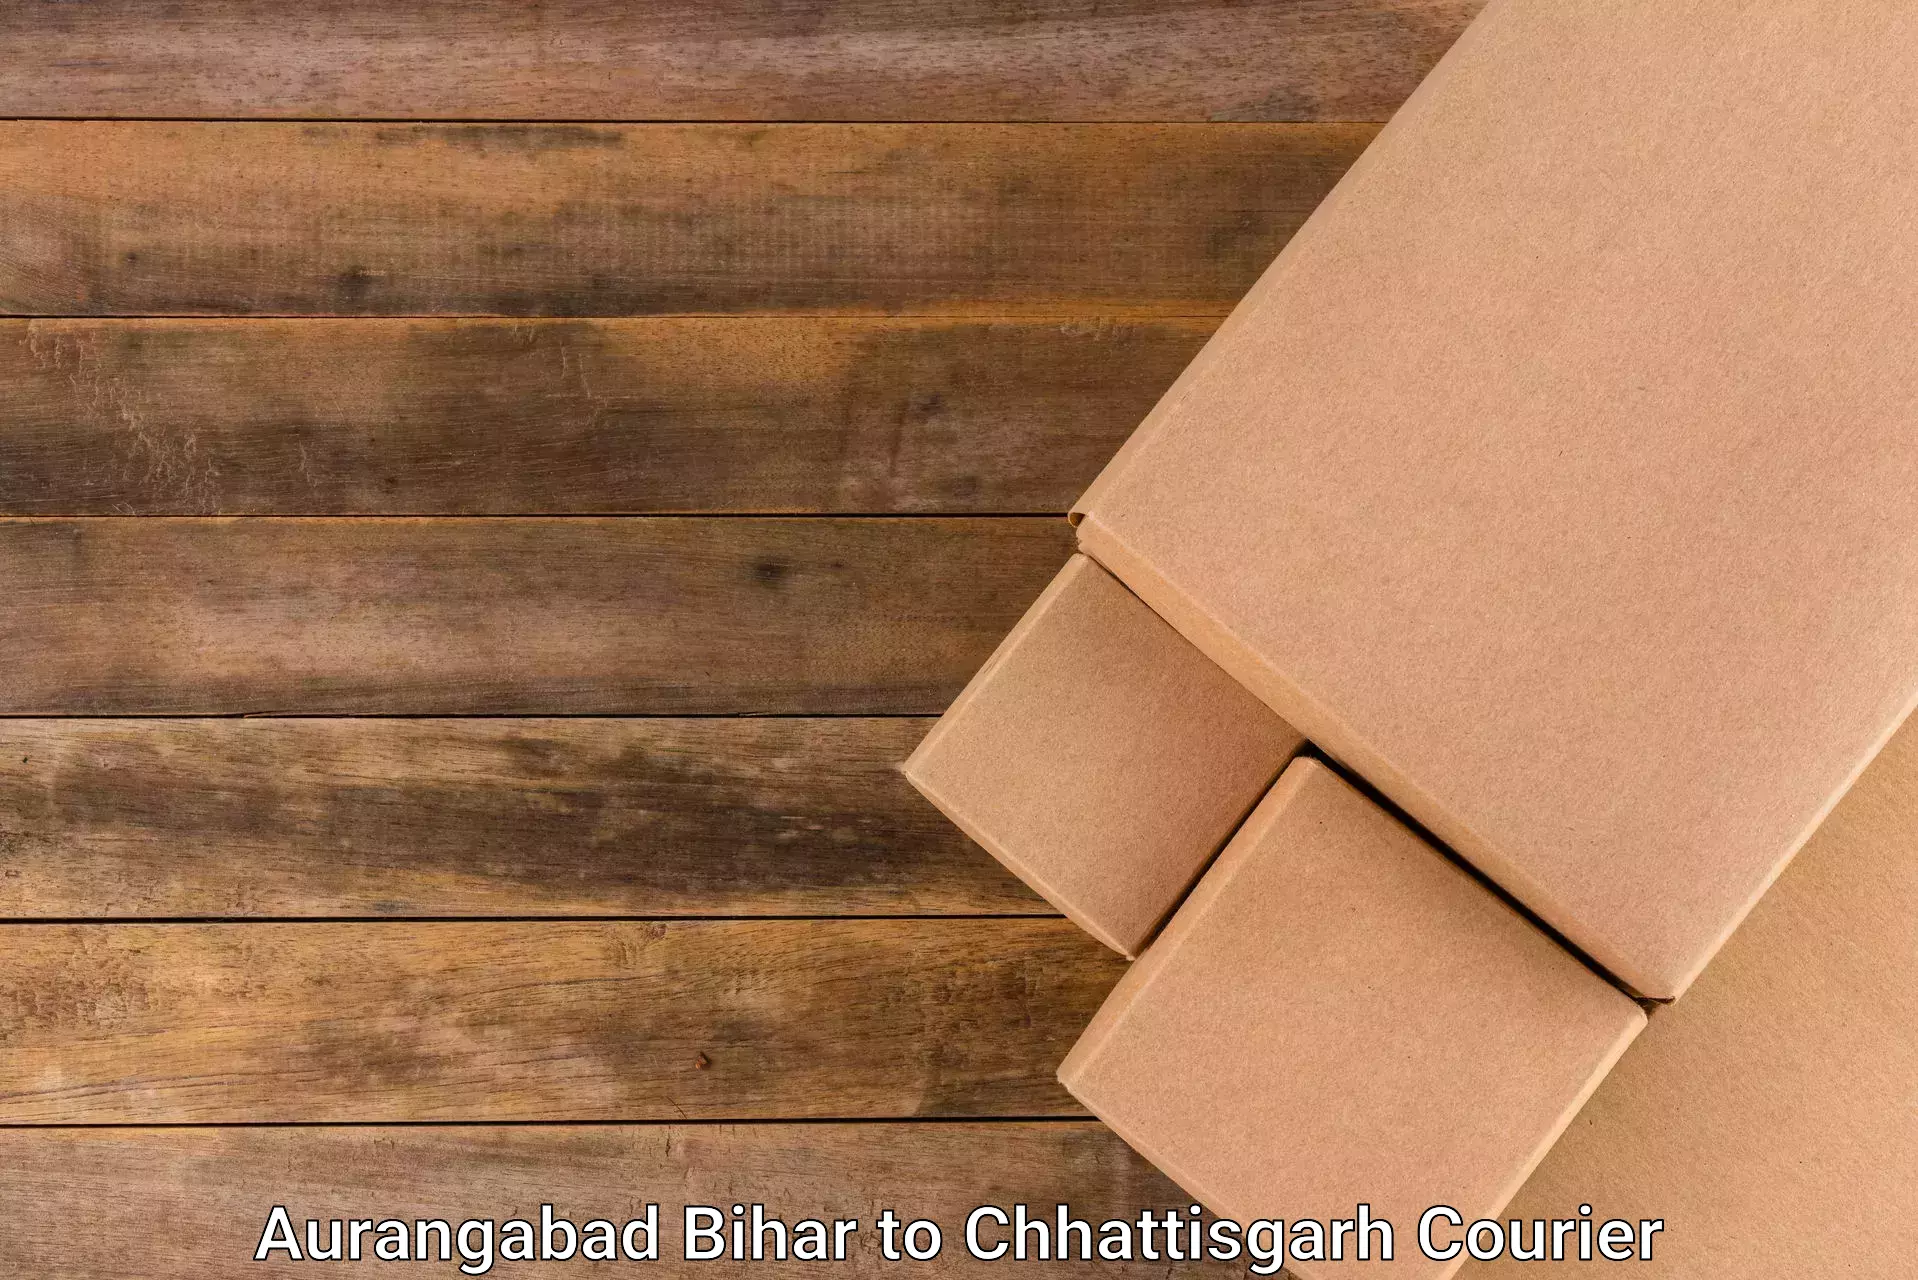 Pharmaceutical courier Aurangabad Bihar to Shivrinarayan